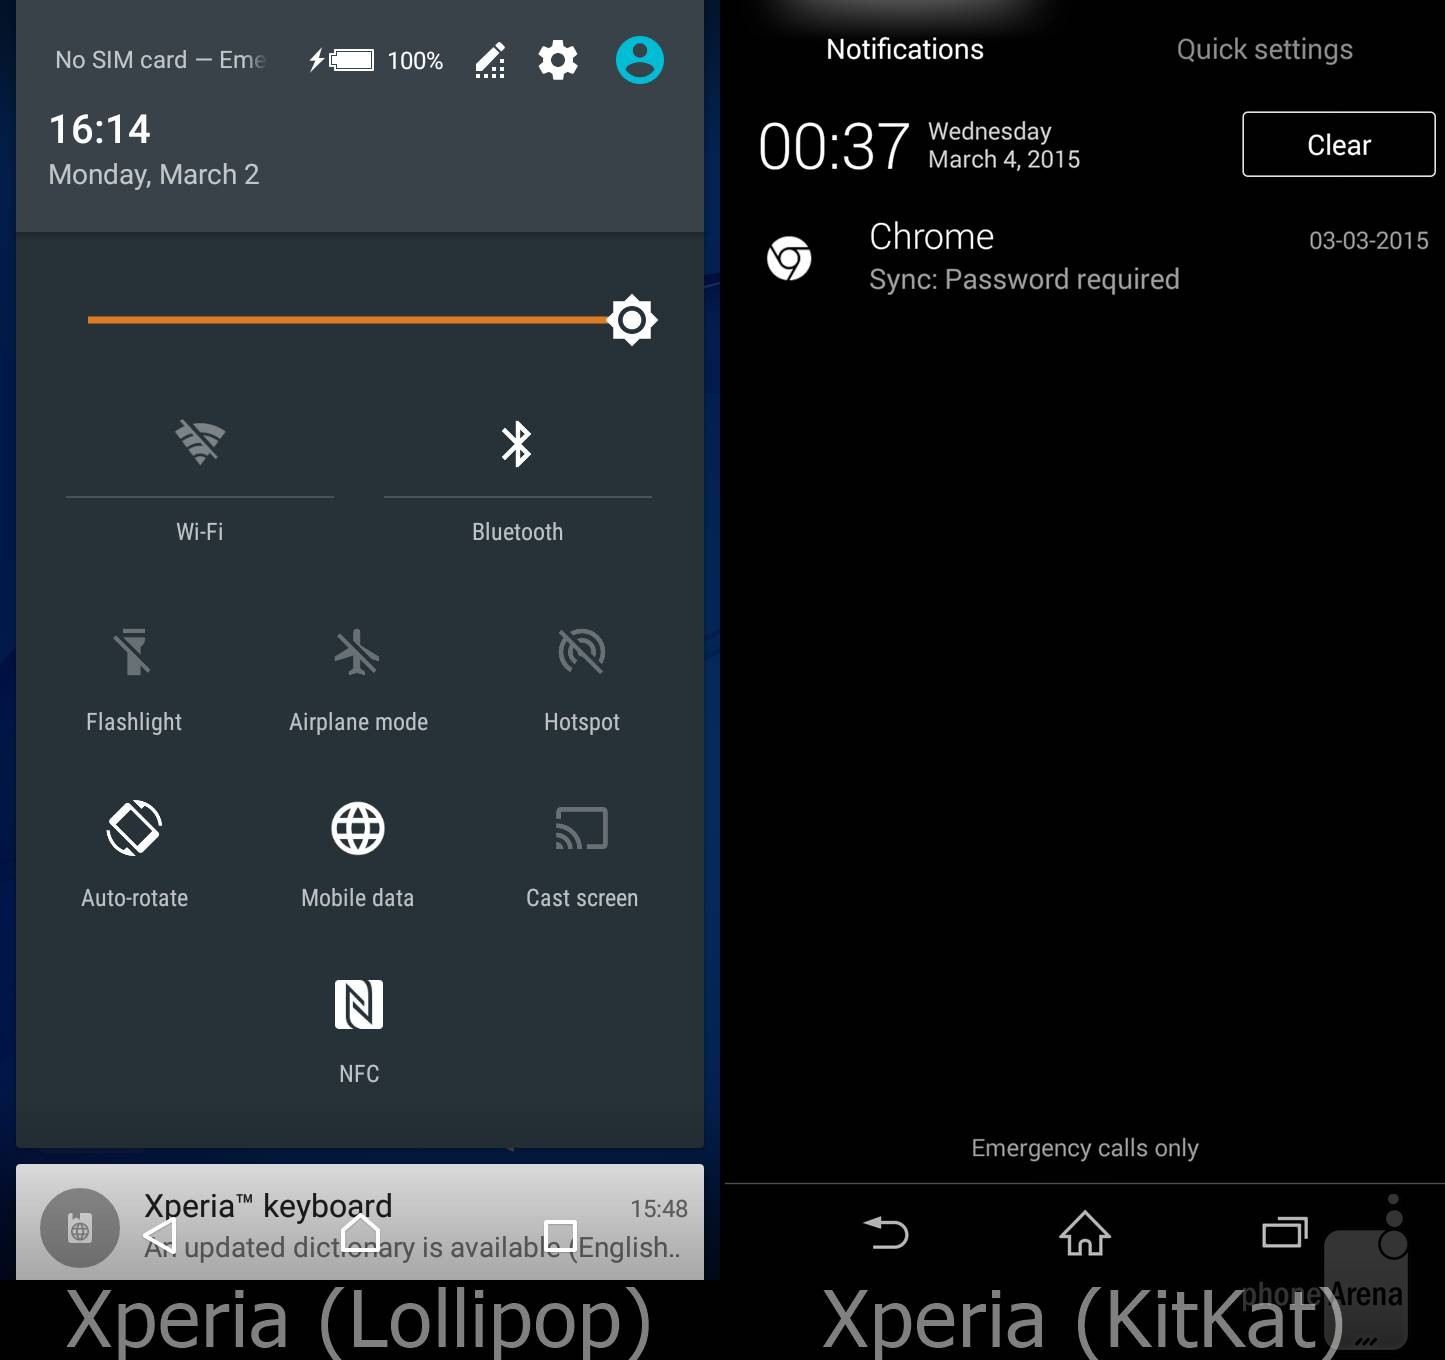 Xperia Lollipop vs Xperia KitKat UI Comparison 1